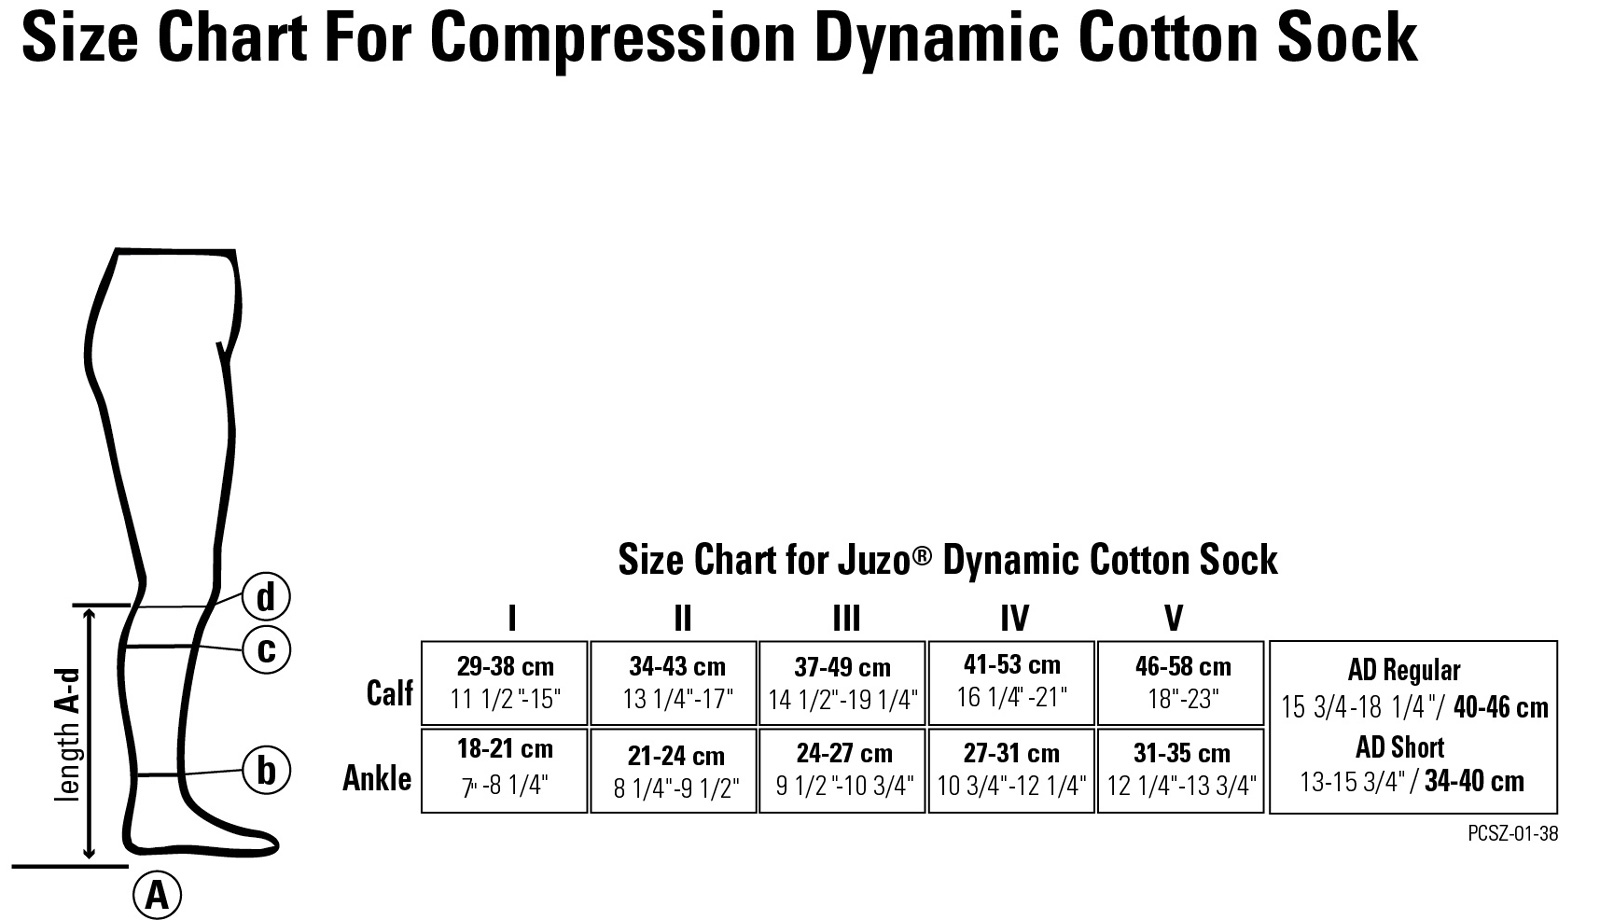 Juzo Dynamic Cotton For Men - Luna Medical lymphedema Garment Experts